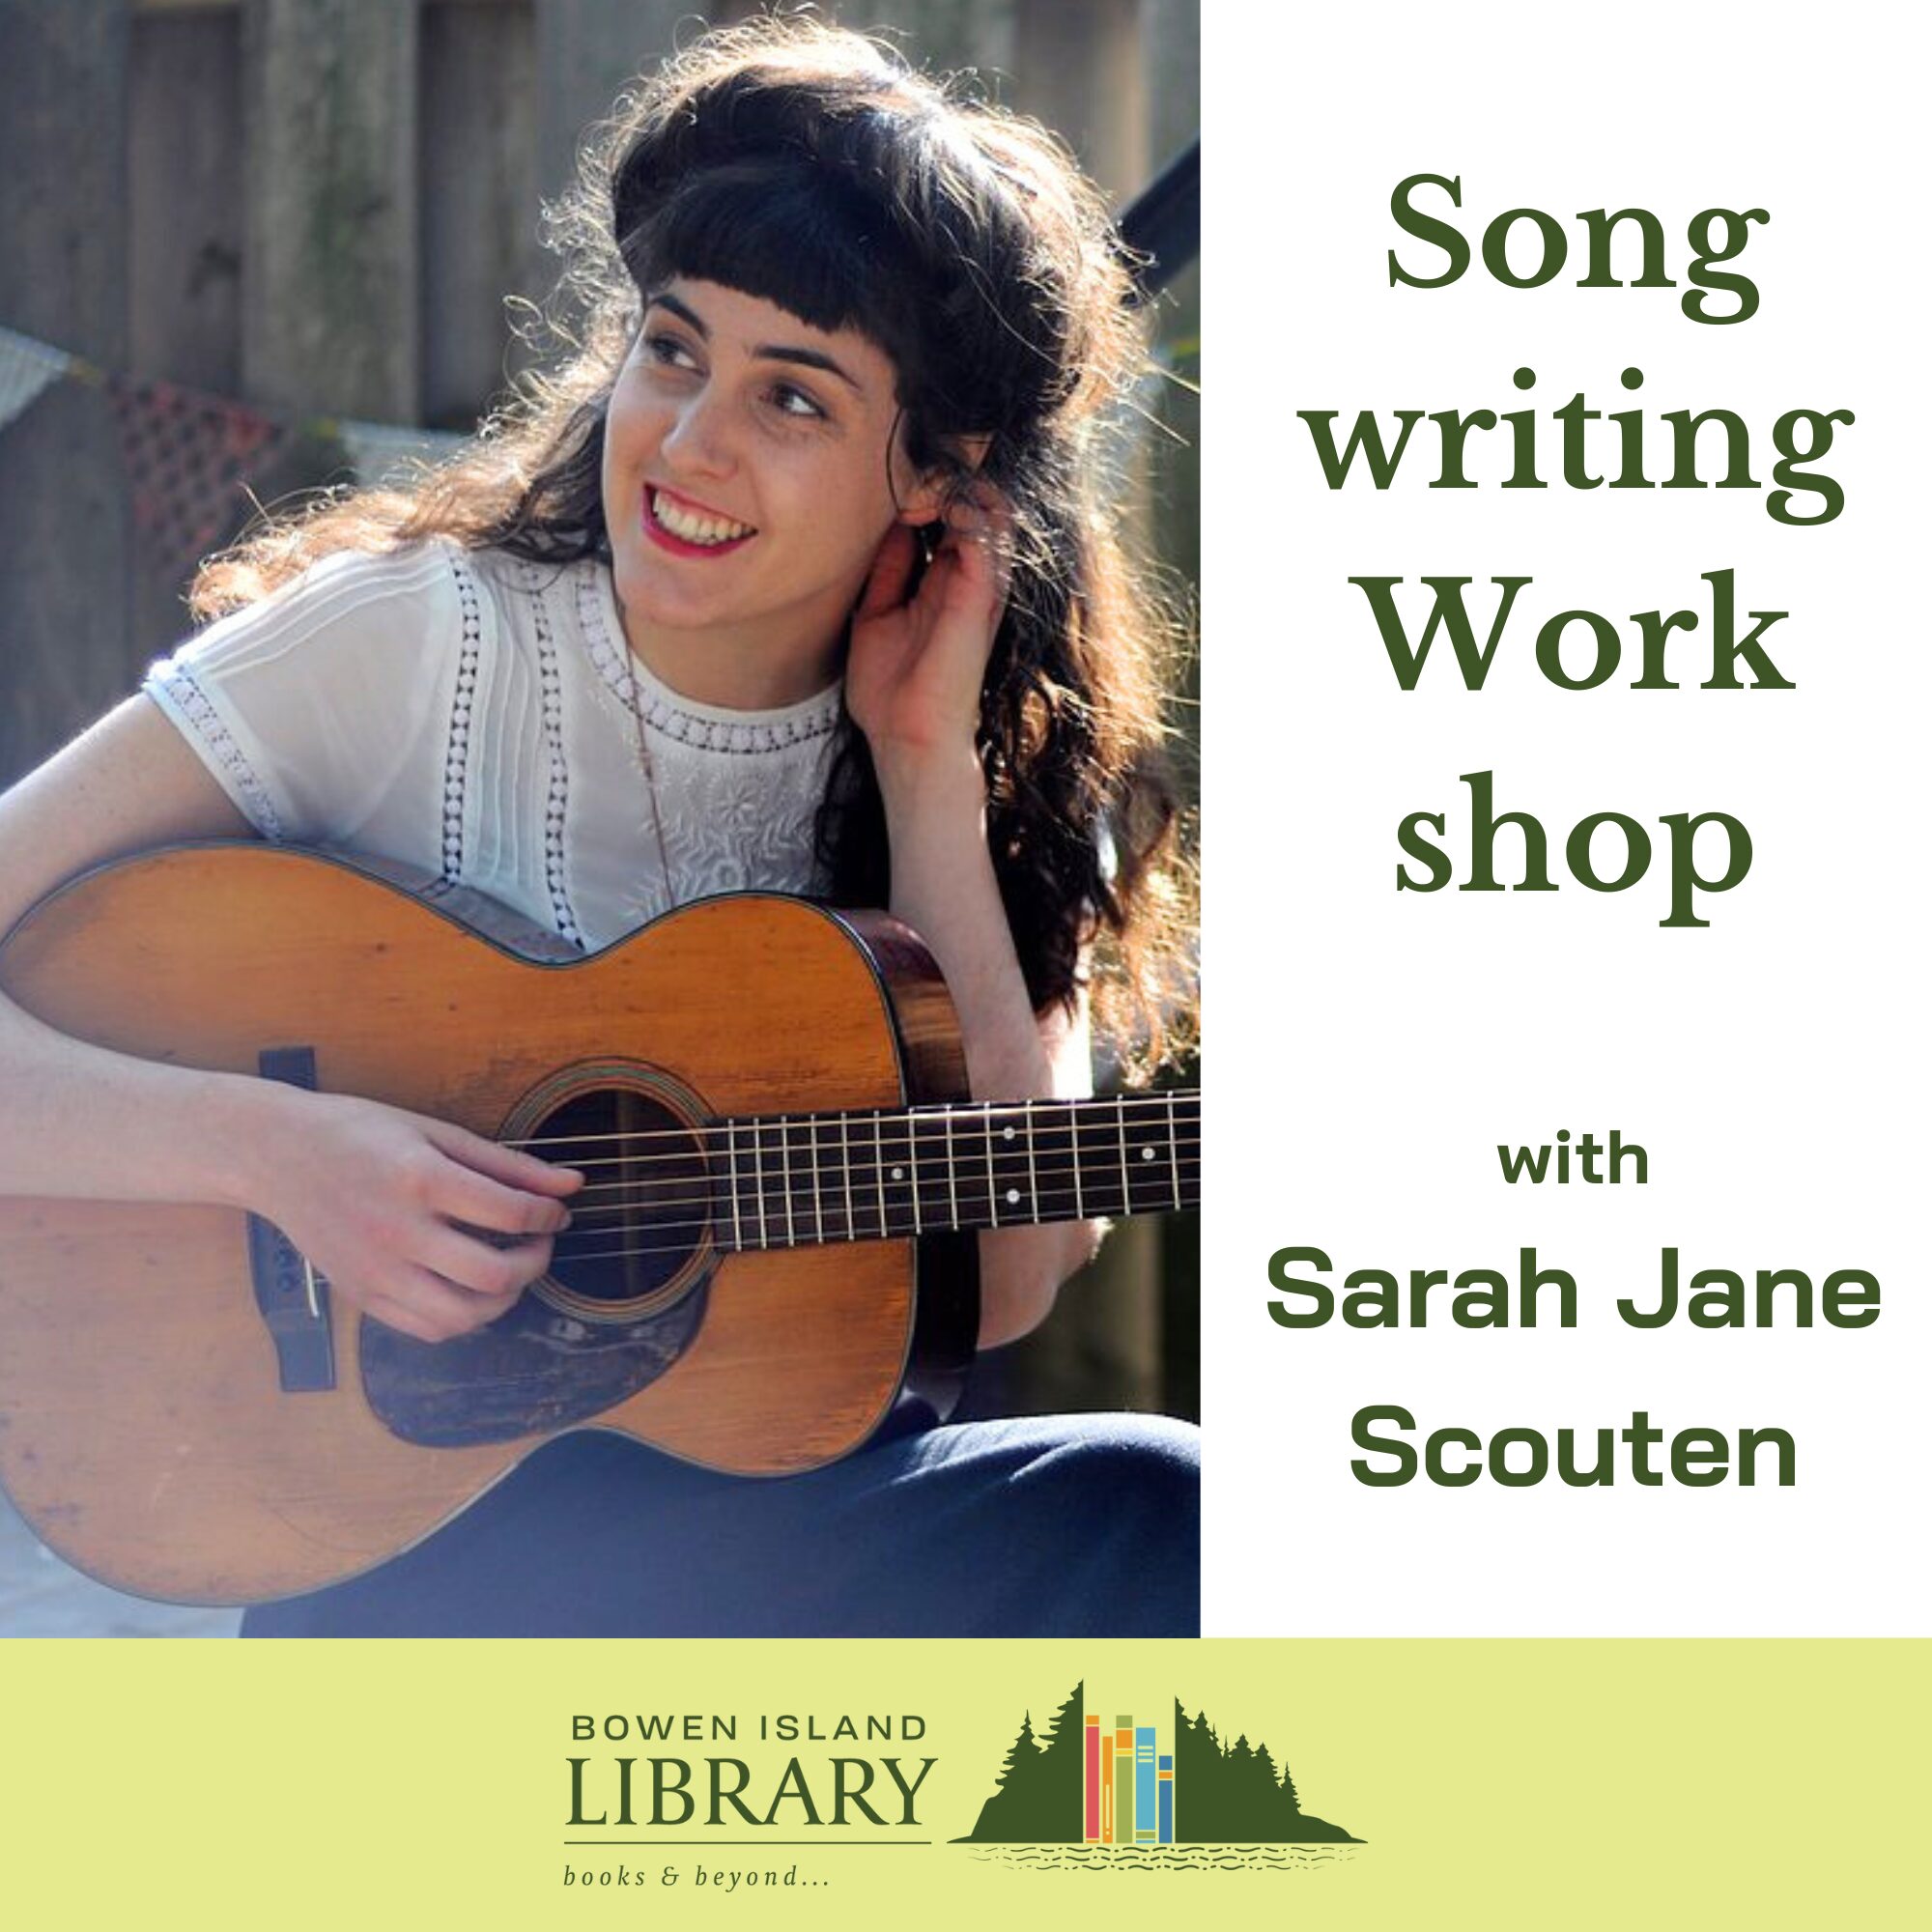 song writing workshop with sarah jane scouten; sarah jane smiling with guitar